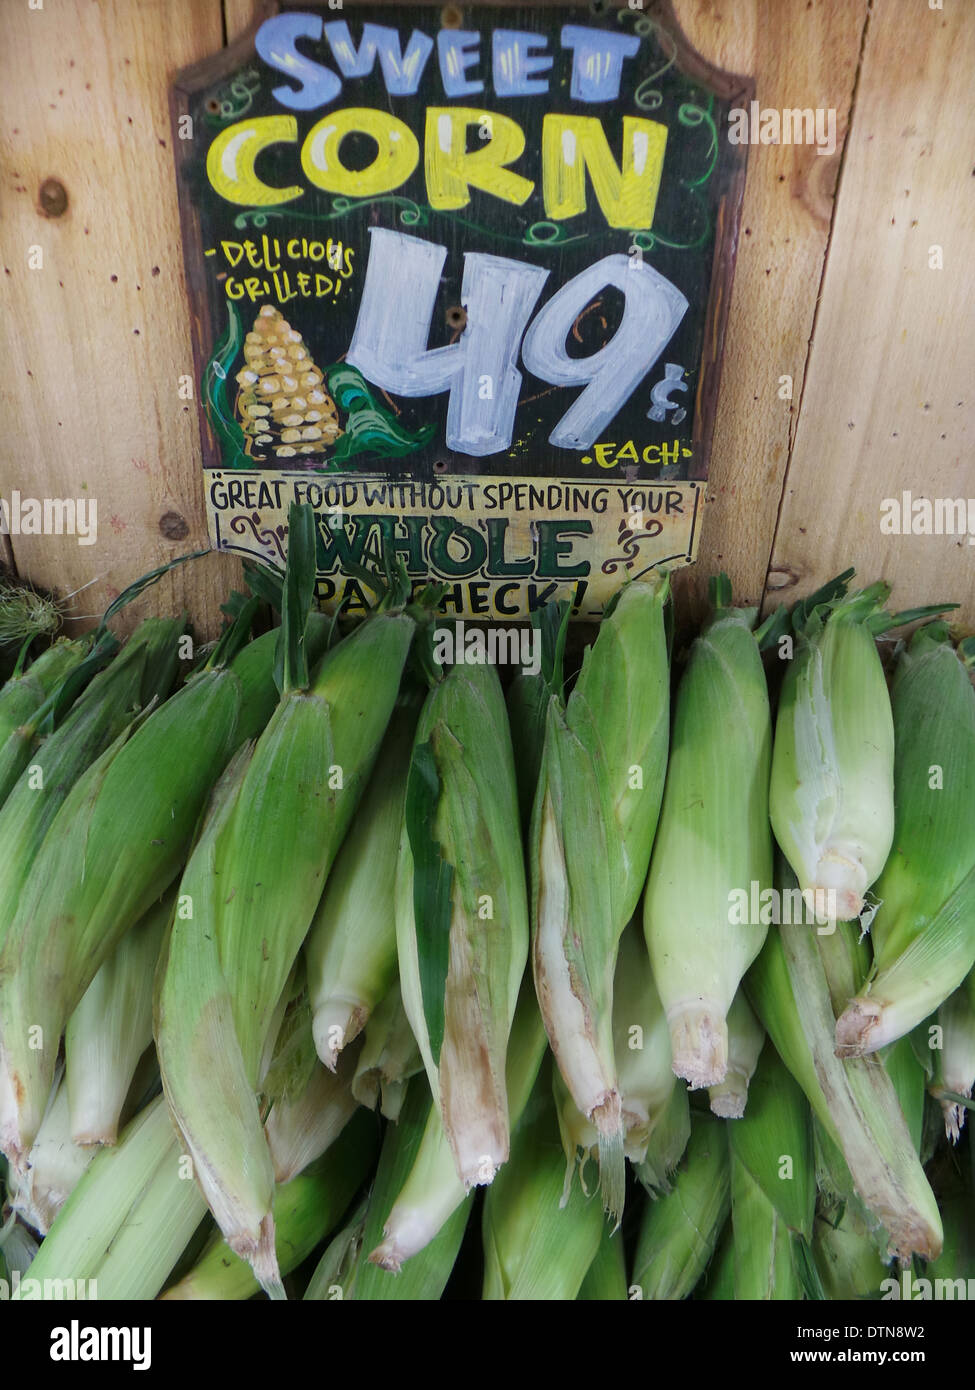 Sweet corn on sale Stock Photo